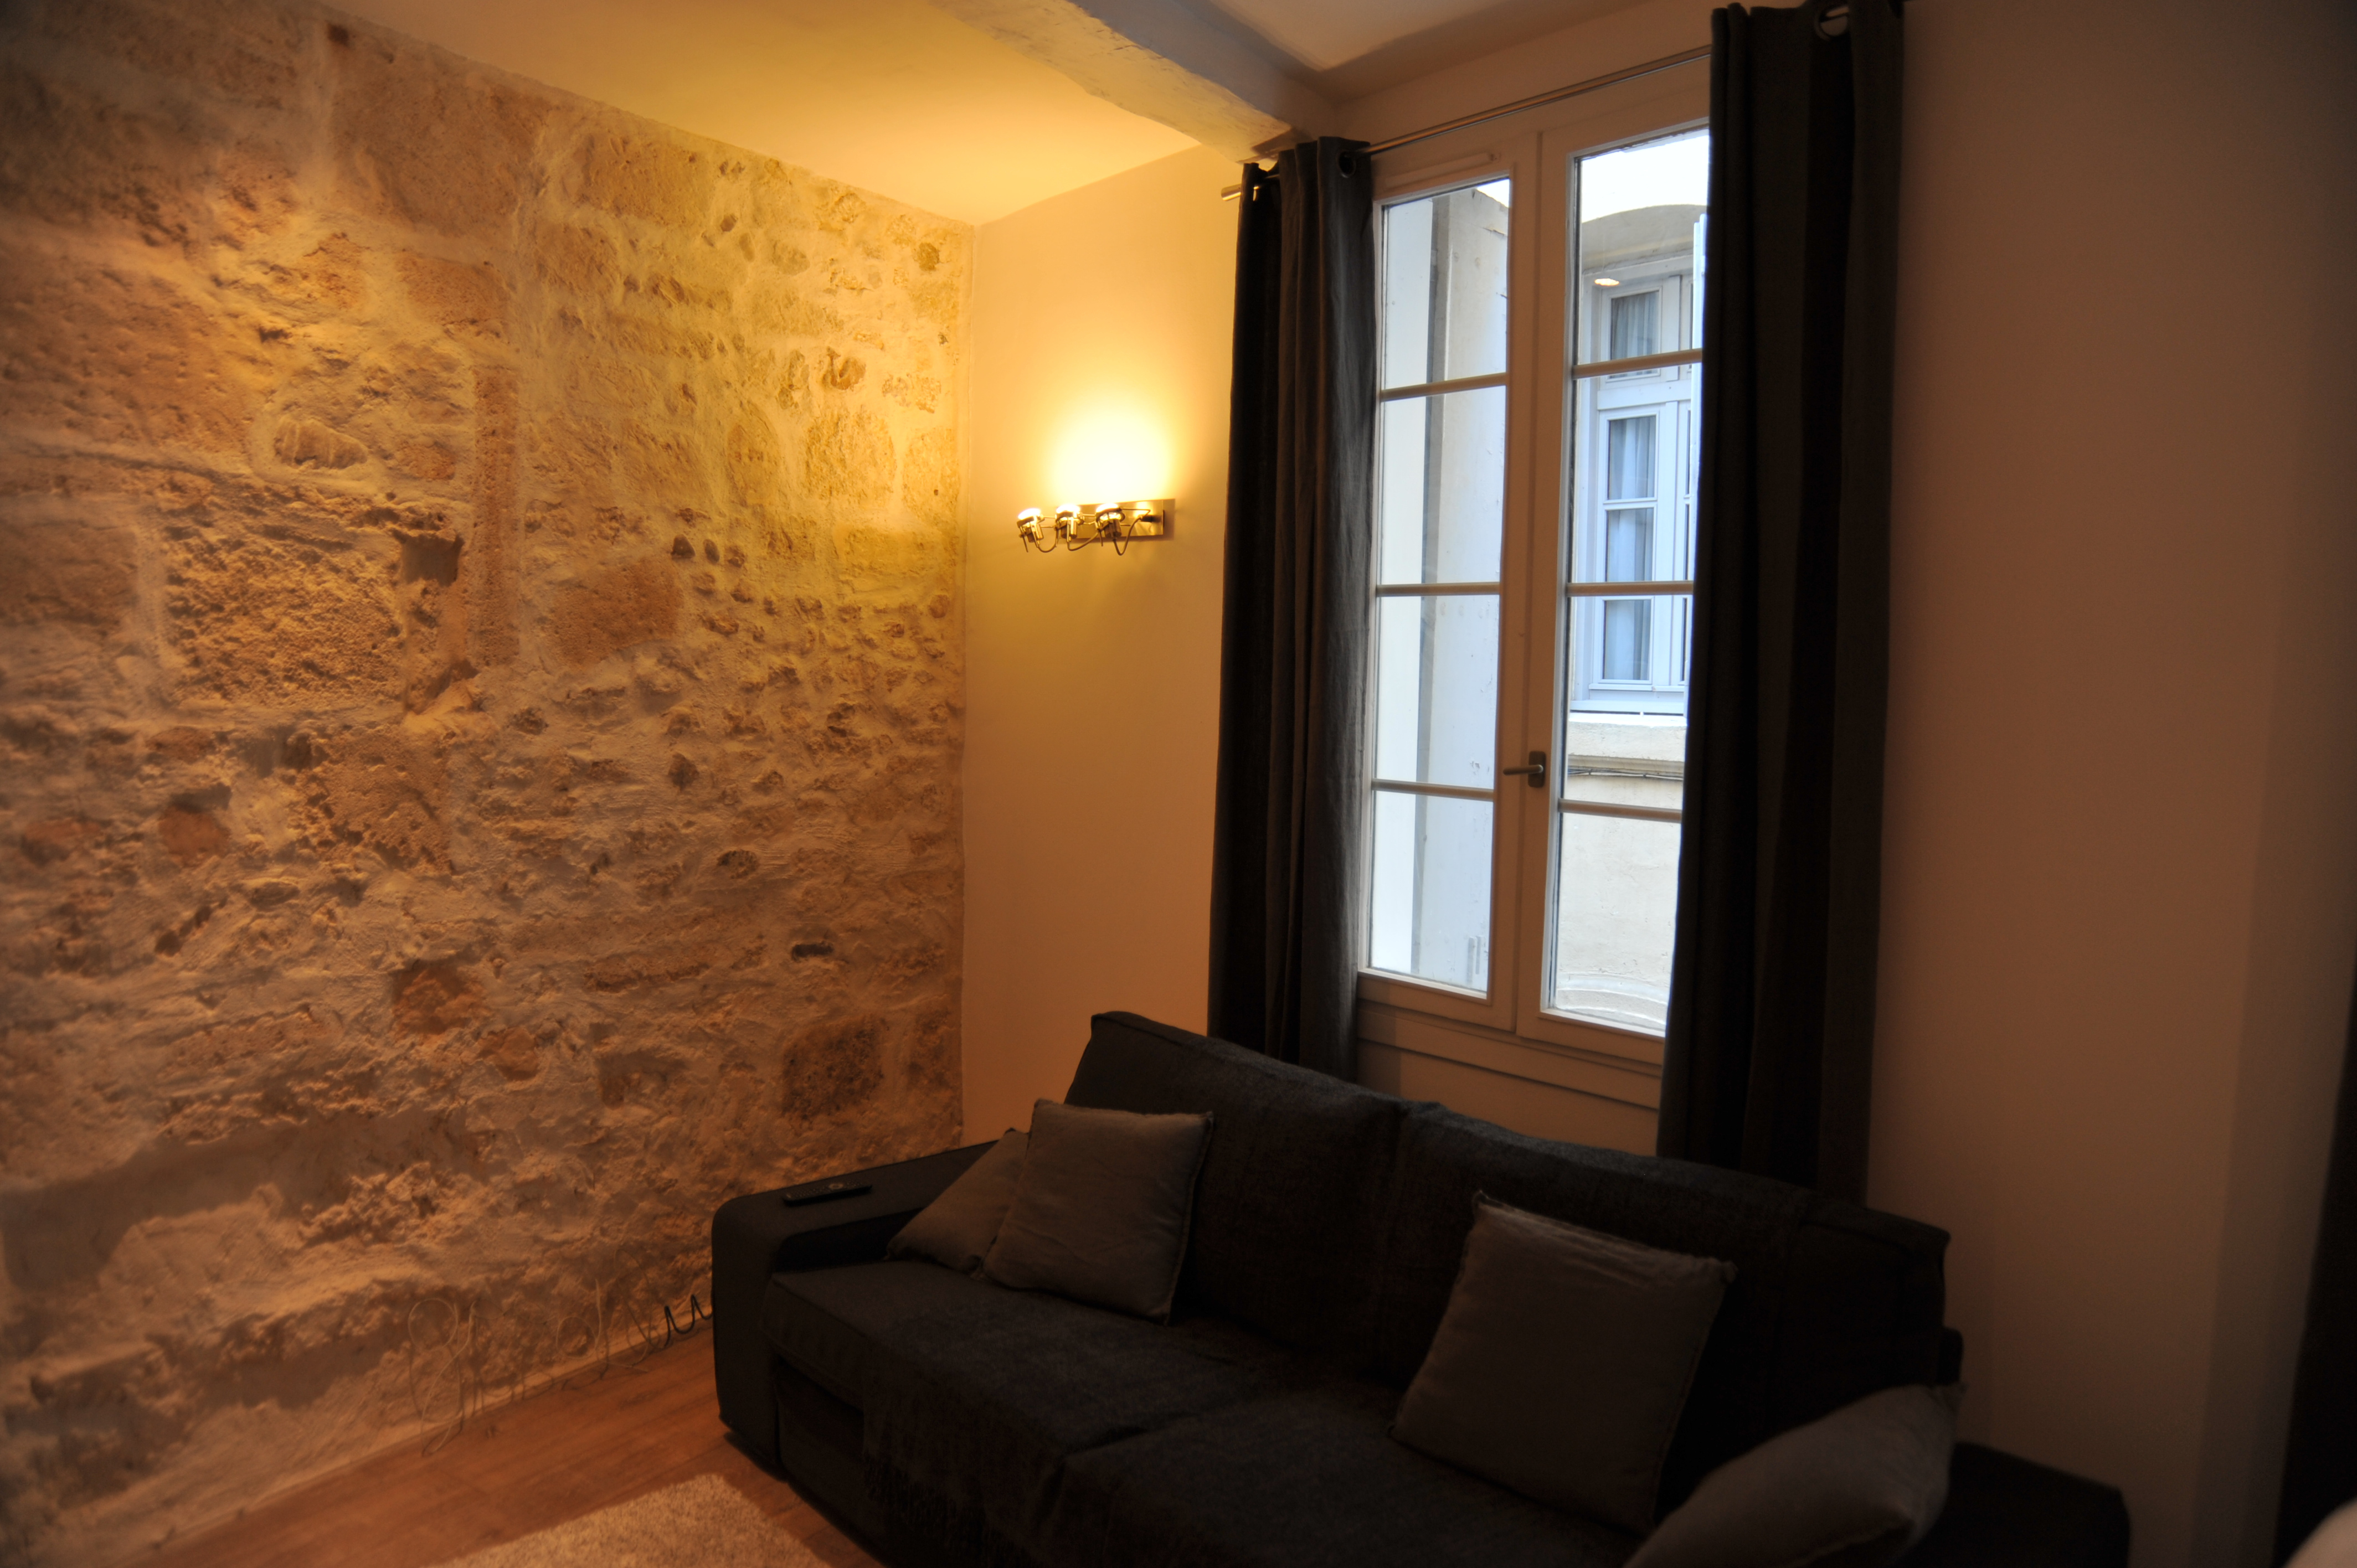 Location Appartement Montpellier ⌲ Louer Appartement (34000) concernant Appartement Meublé Montpellier